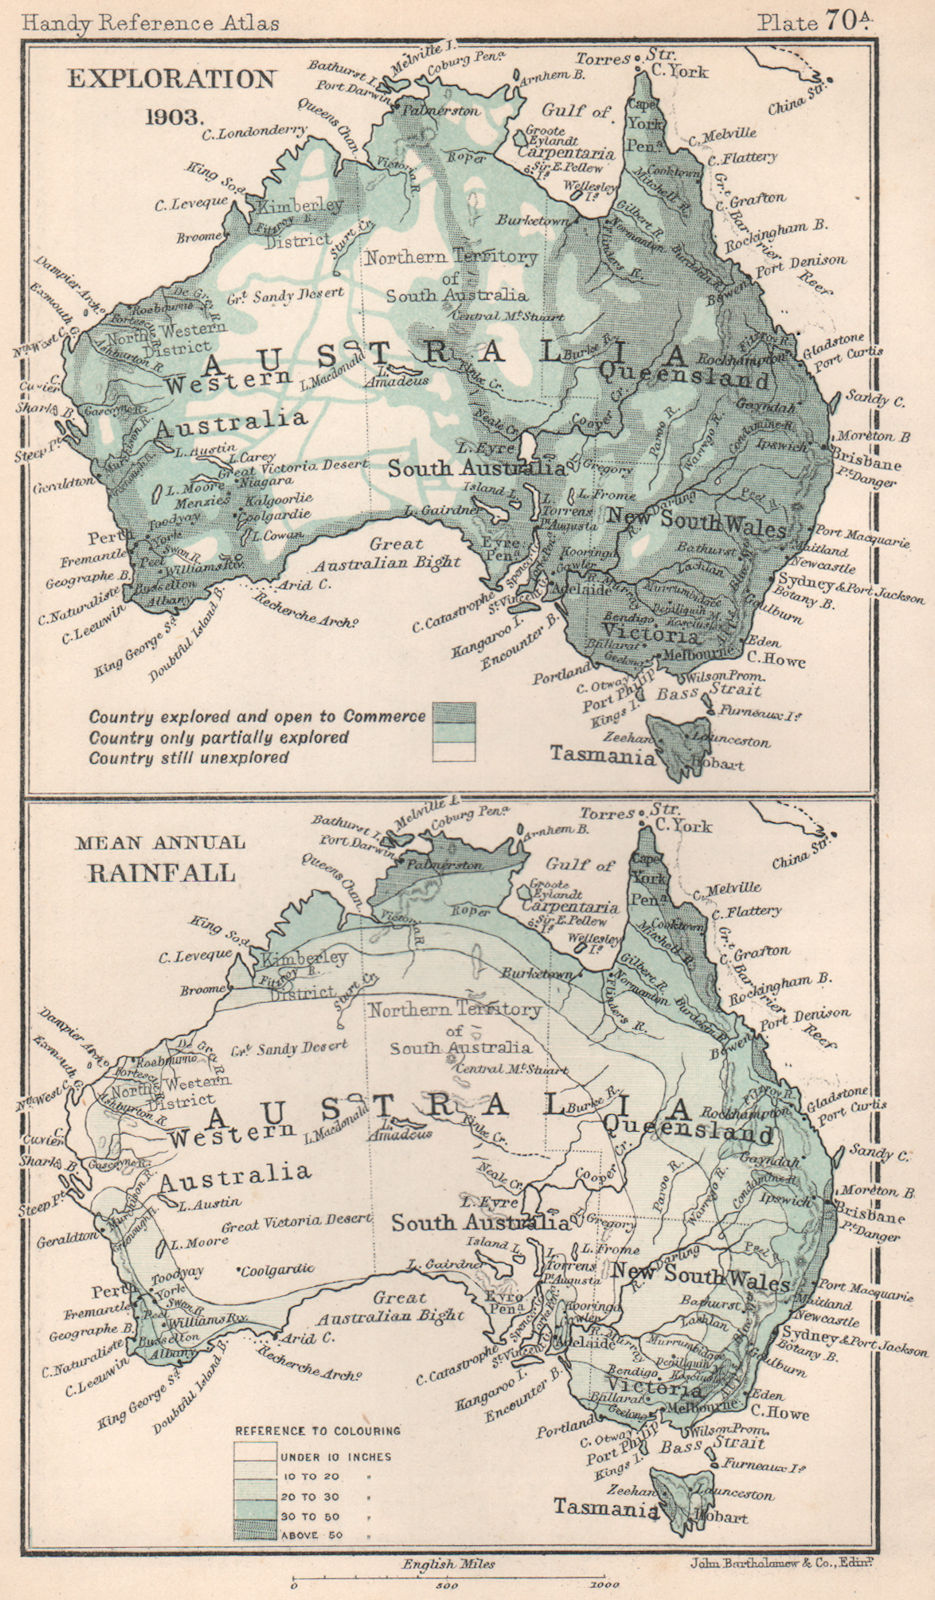 Australia explored areas in 1903. Mean Annual Rainfall. BARTHOLOMEW 1904 map